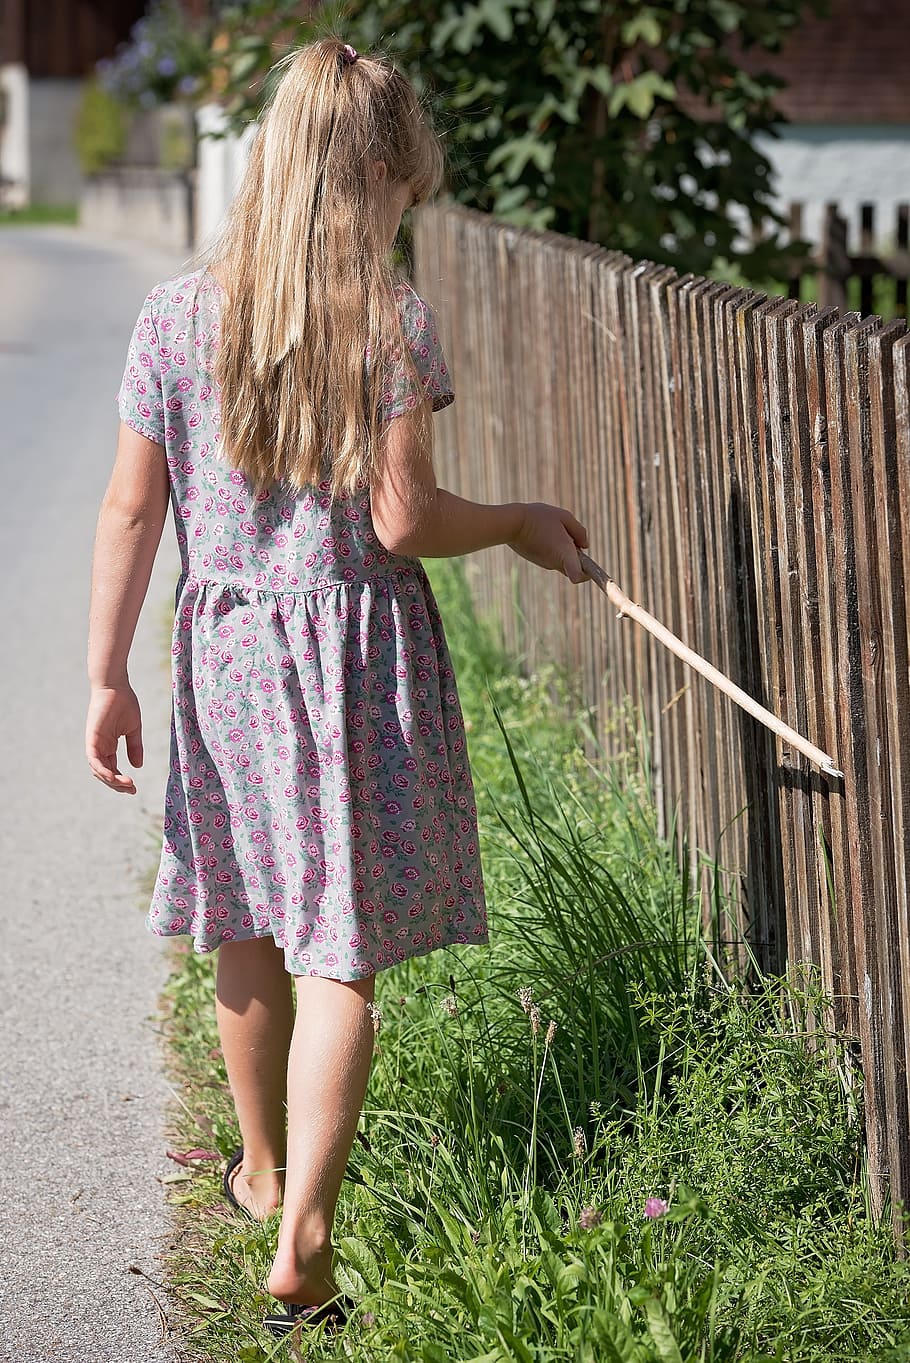 gadis, memegang, tongkat, berjalan, di samping, pagar, masa kecil, anak, lantai, musim panas